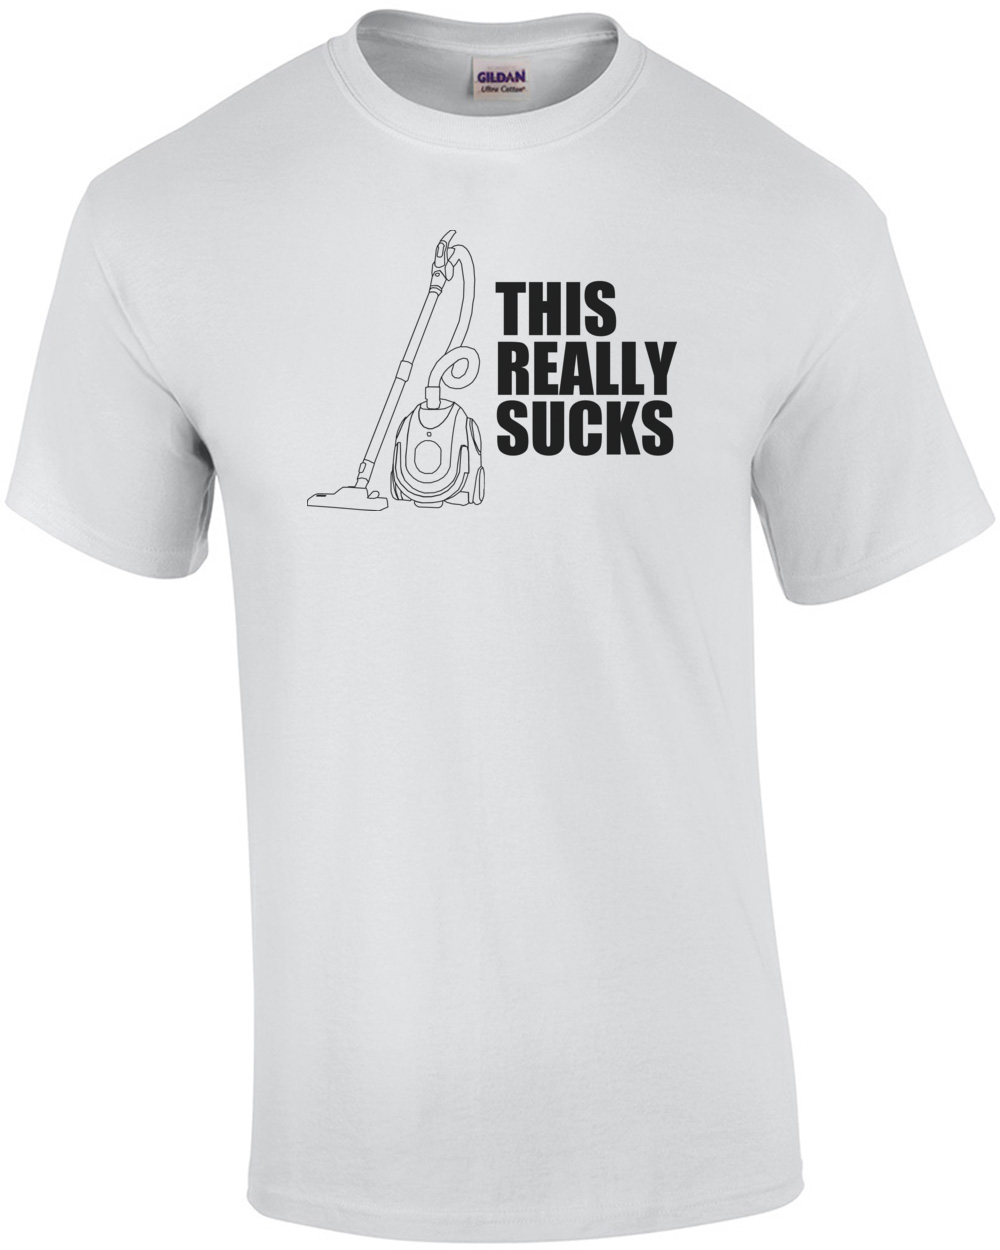 This Really Sucks Funny T-shirt | eBay